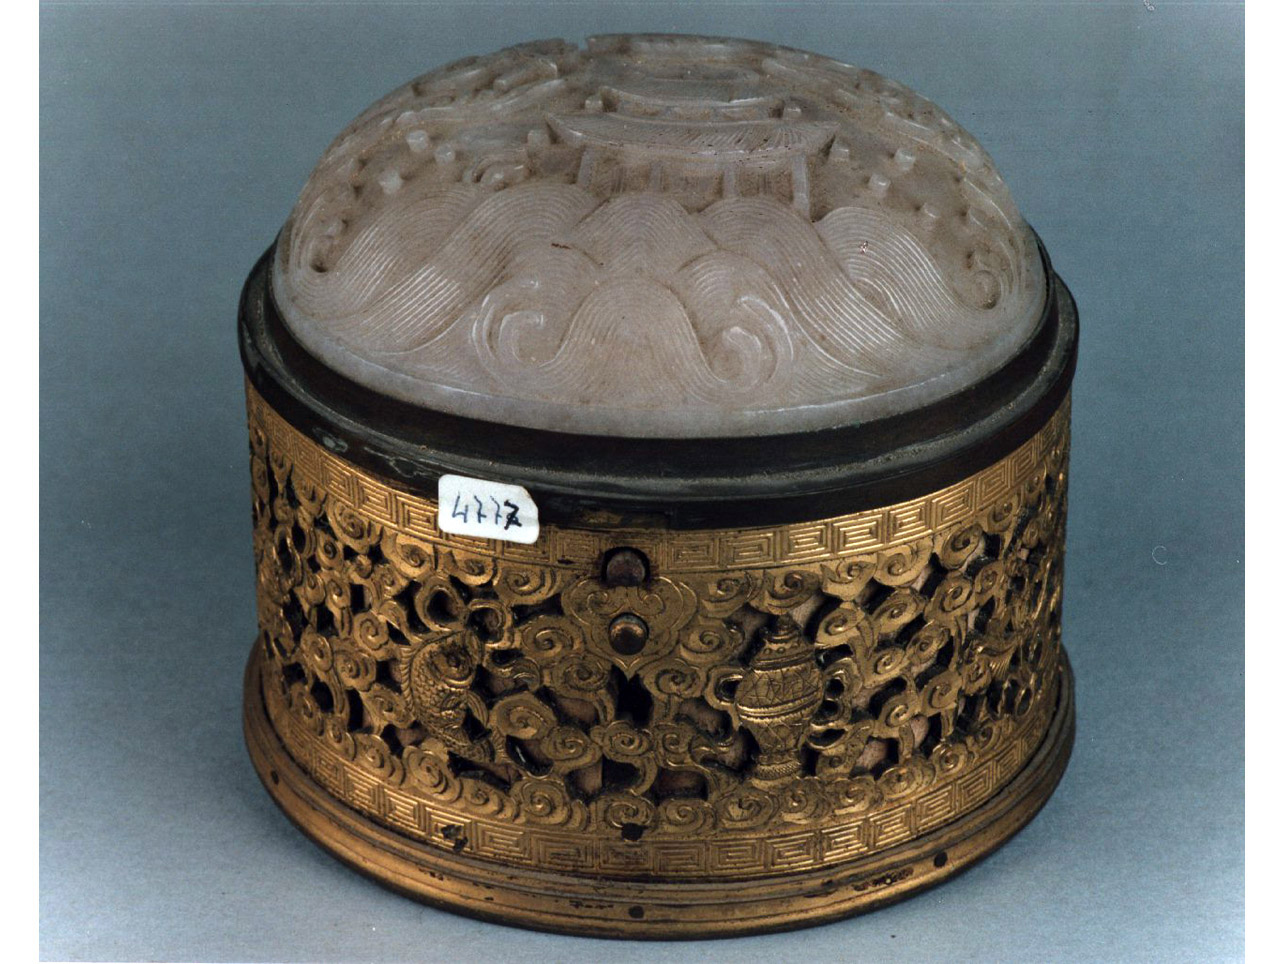 motivi decorativi vegetali e animali (scatola) - manifattura cinese (sec. XVIII)